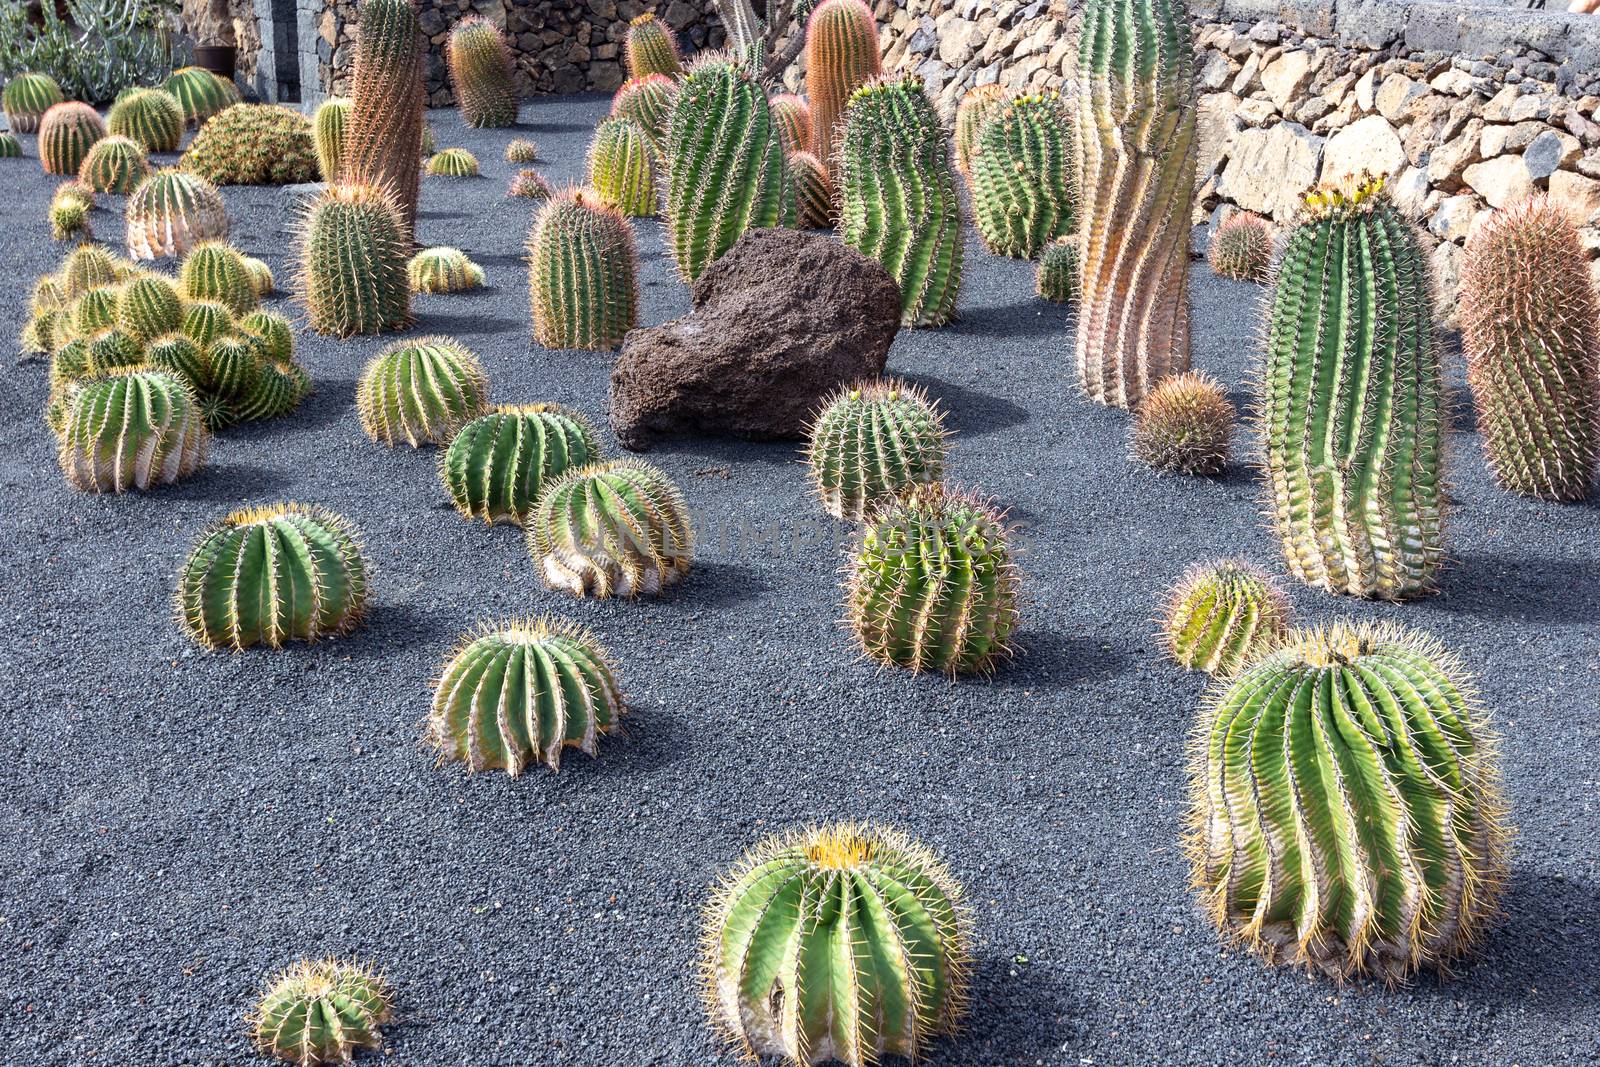 Different types of cactus in Jardin de Cactus by Cesar Manrique  by reinerc